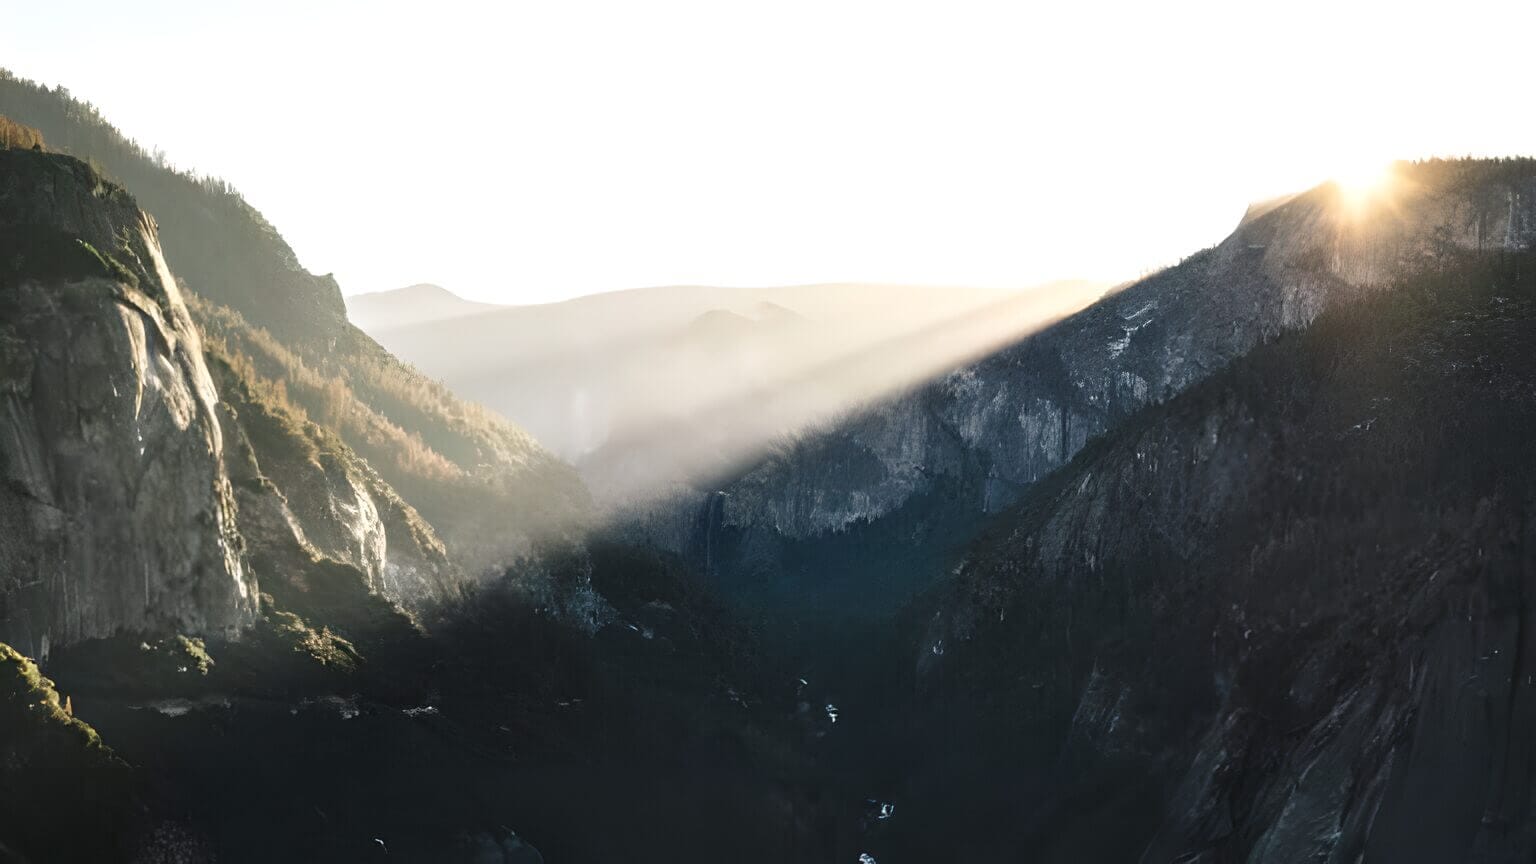 Sunrise In Yosemite: Top 5 Spots To Catch It